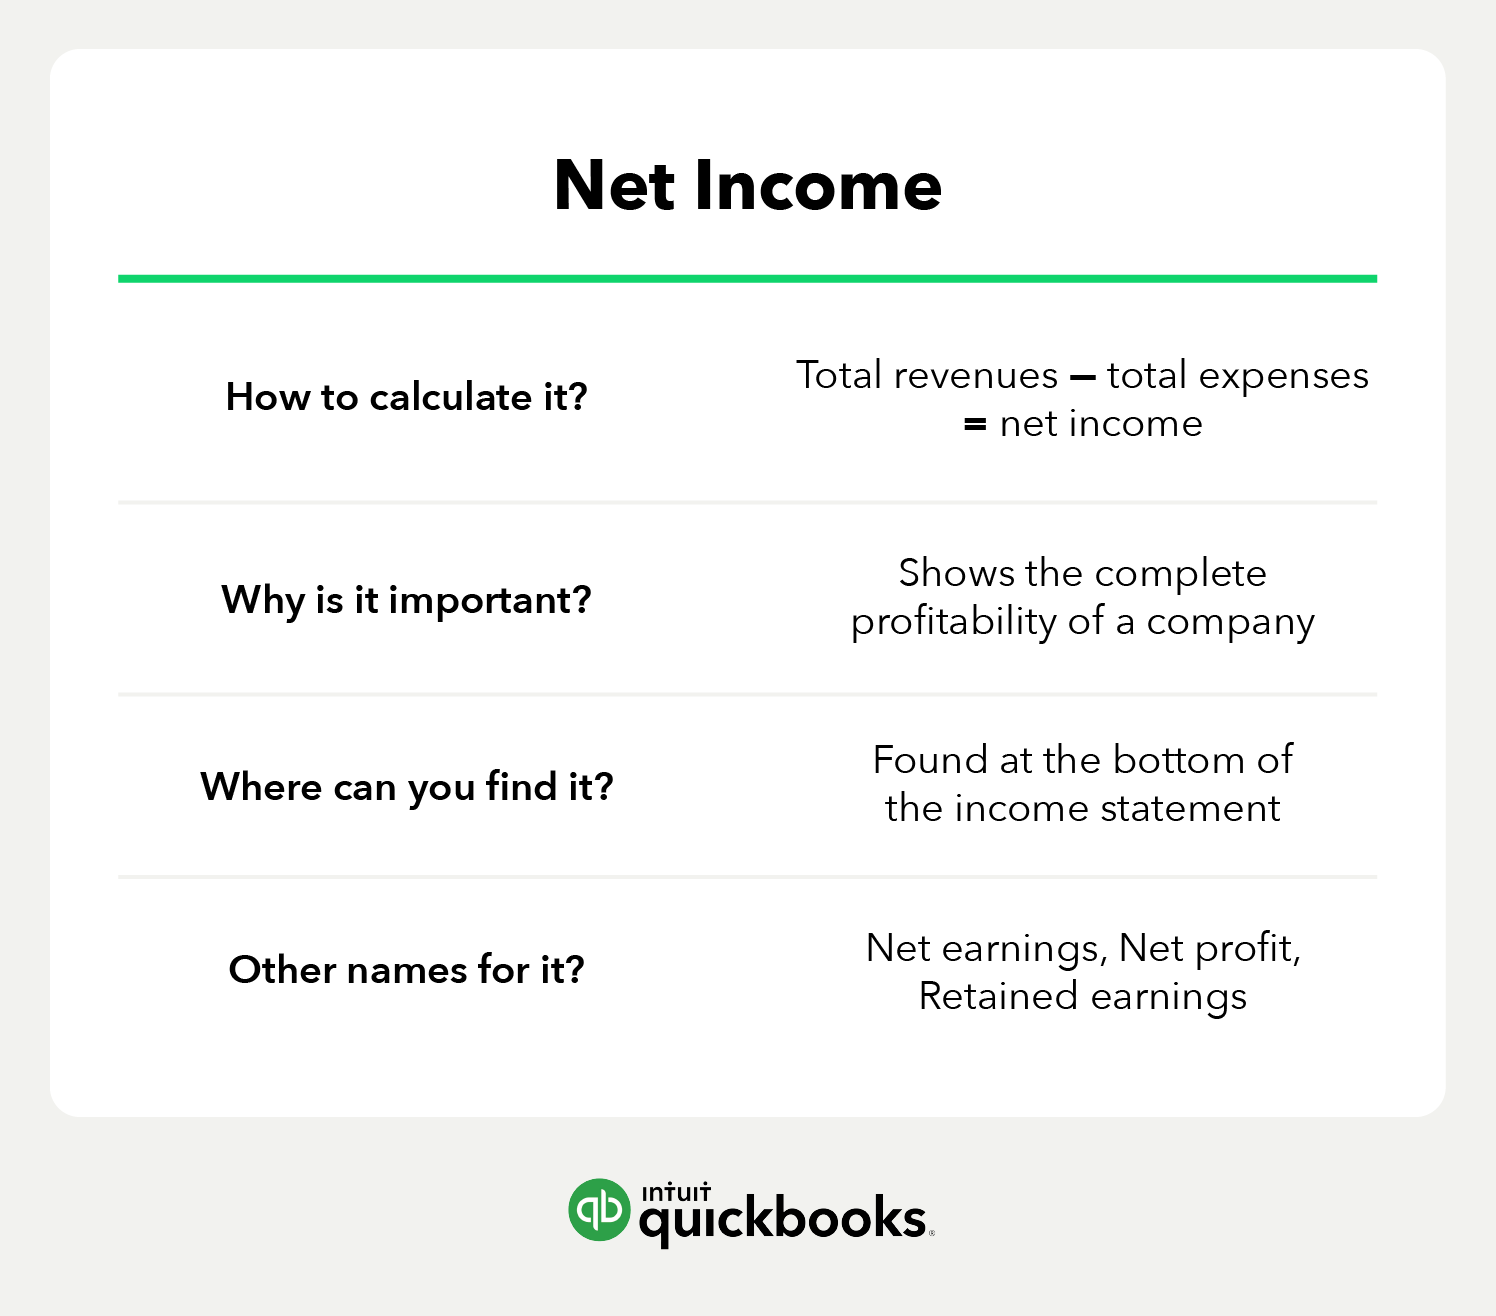 Net income summarization.